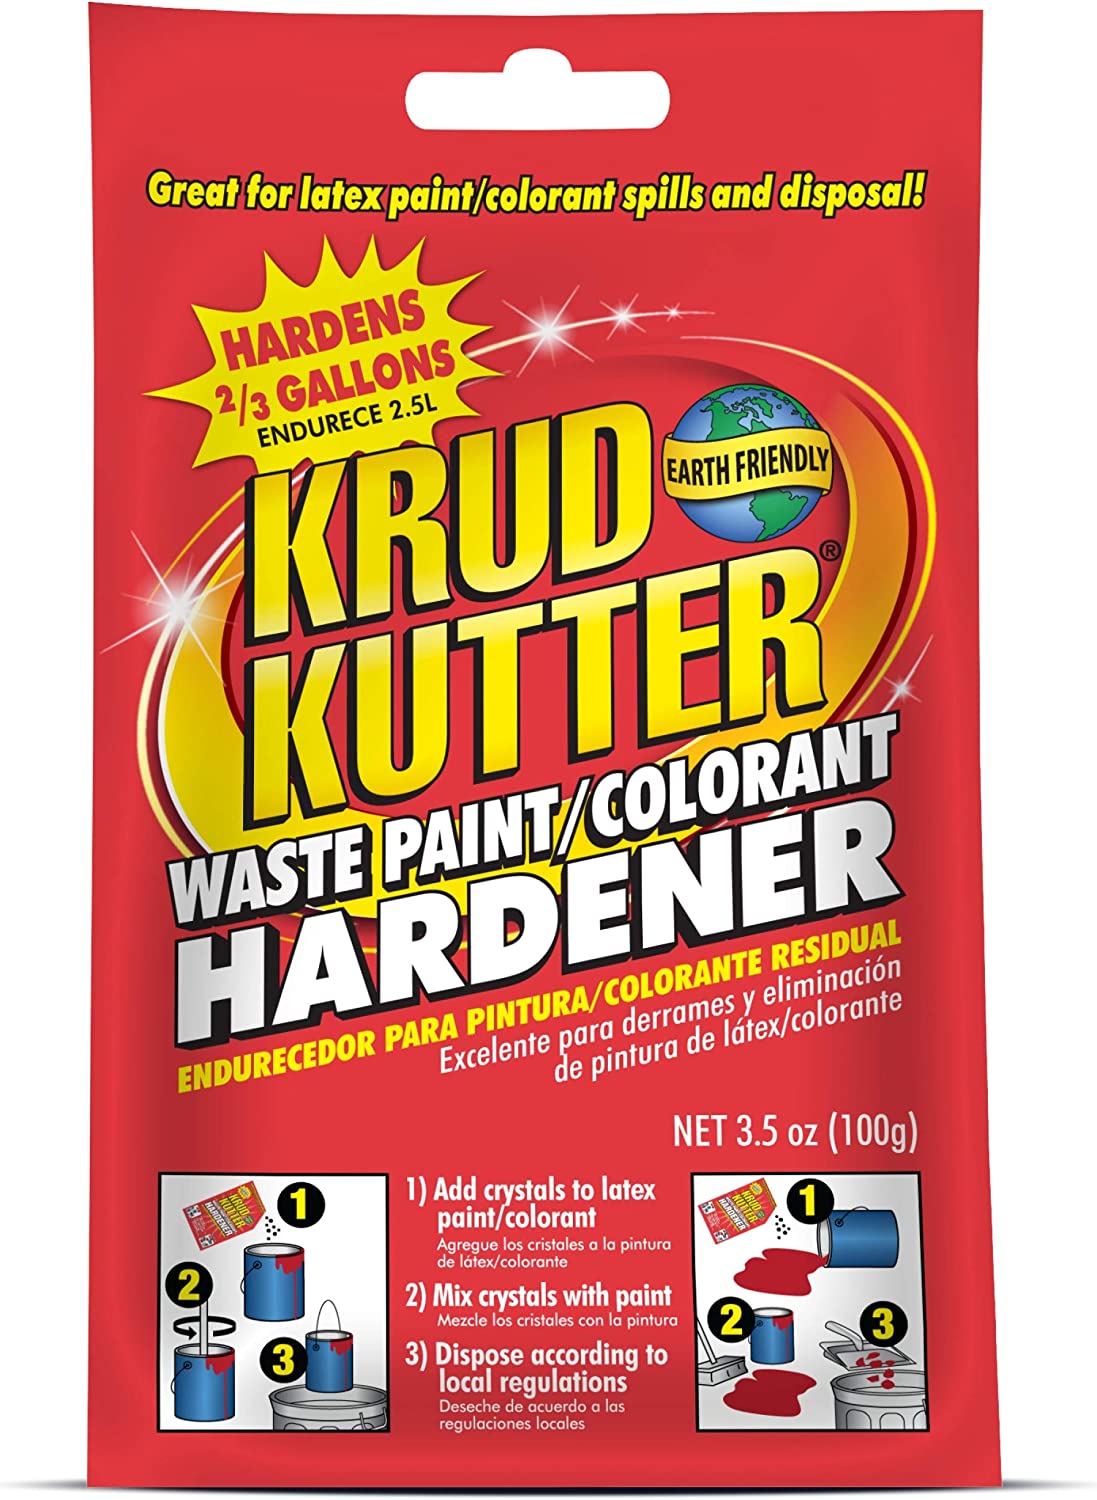 waste paint hardener